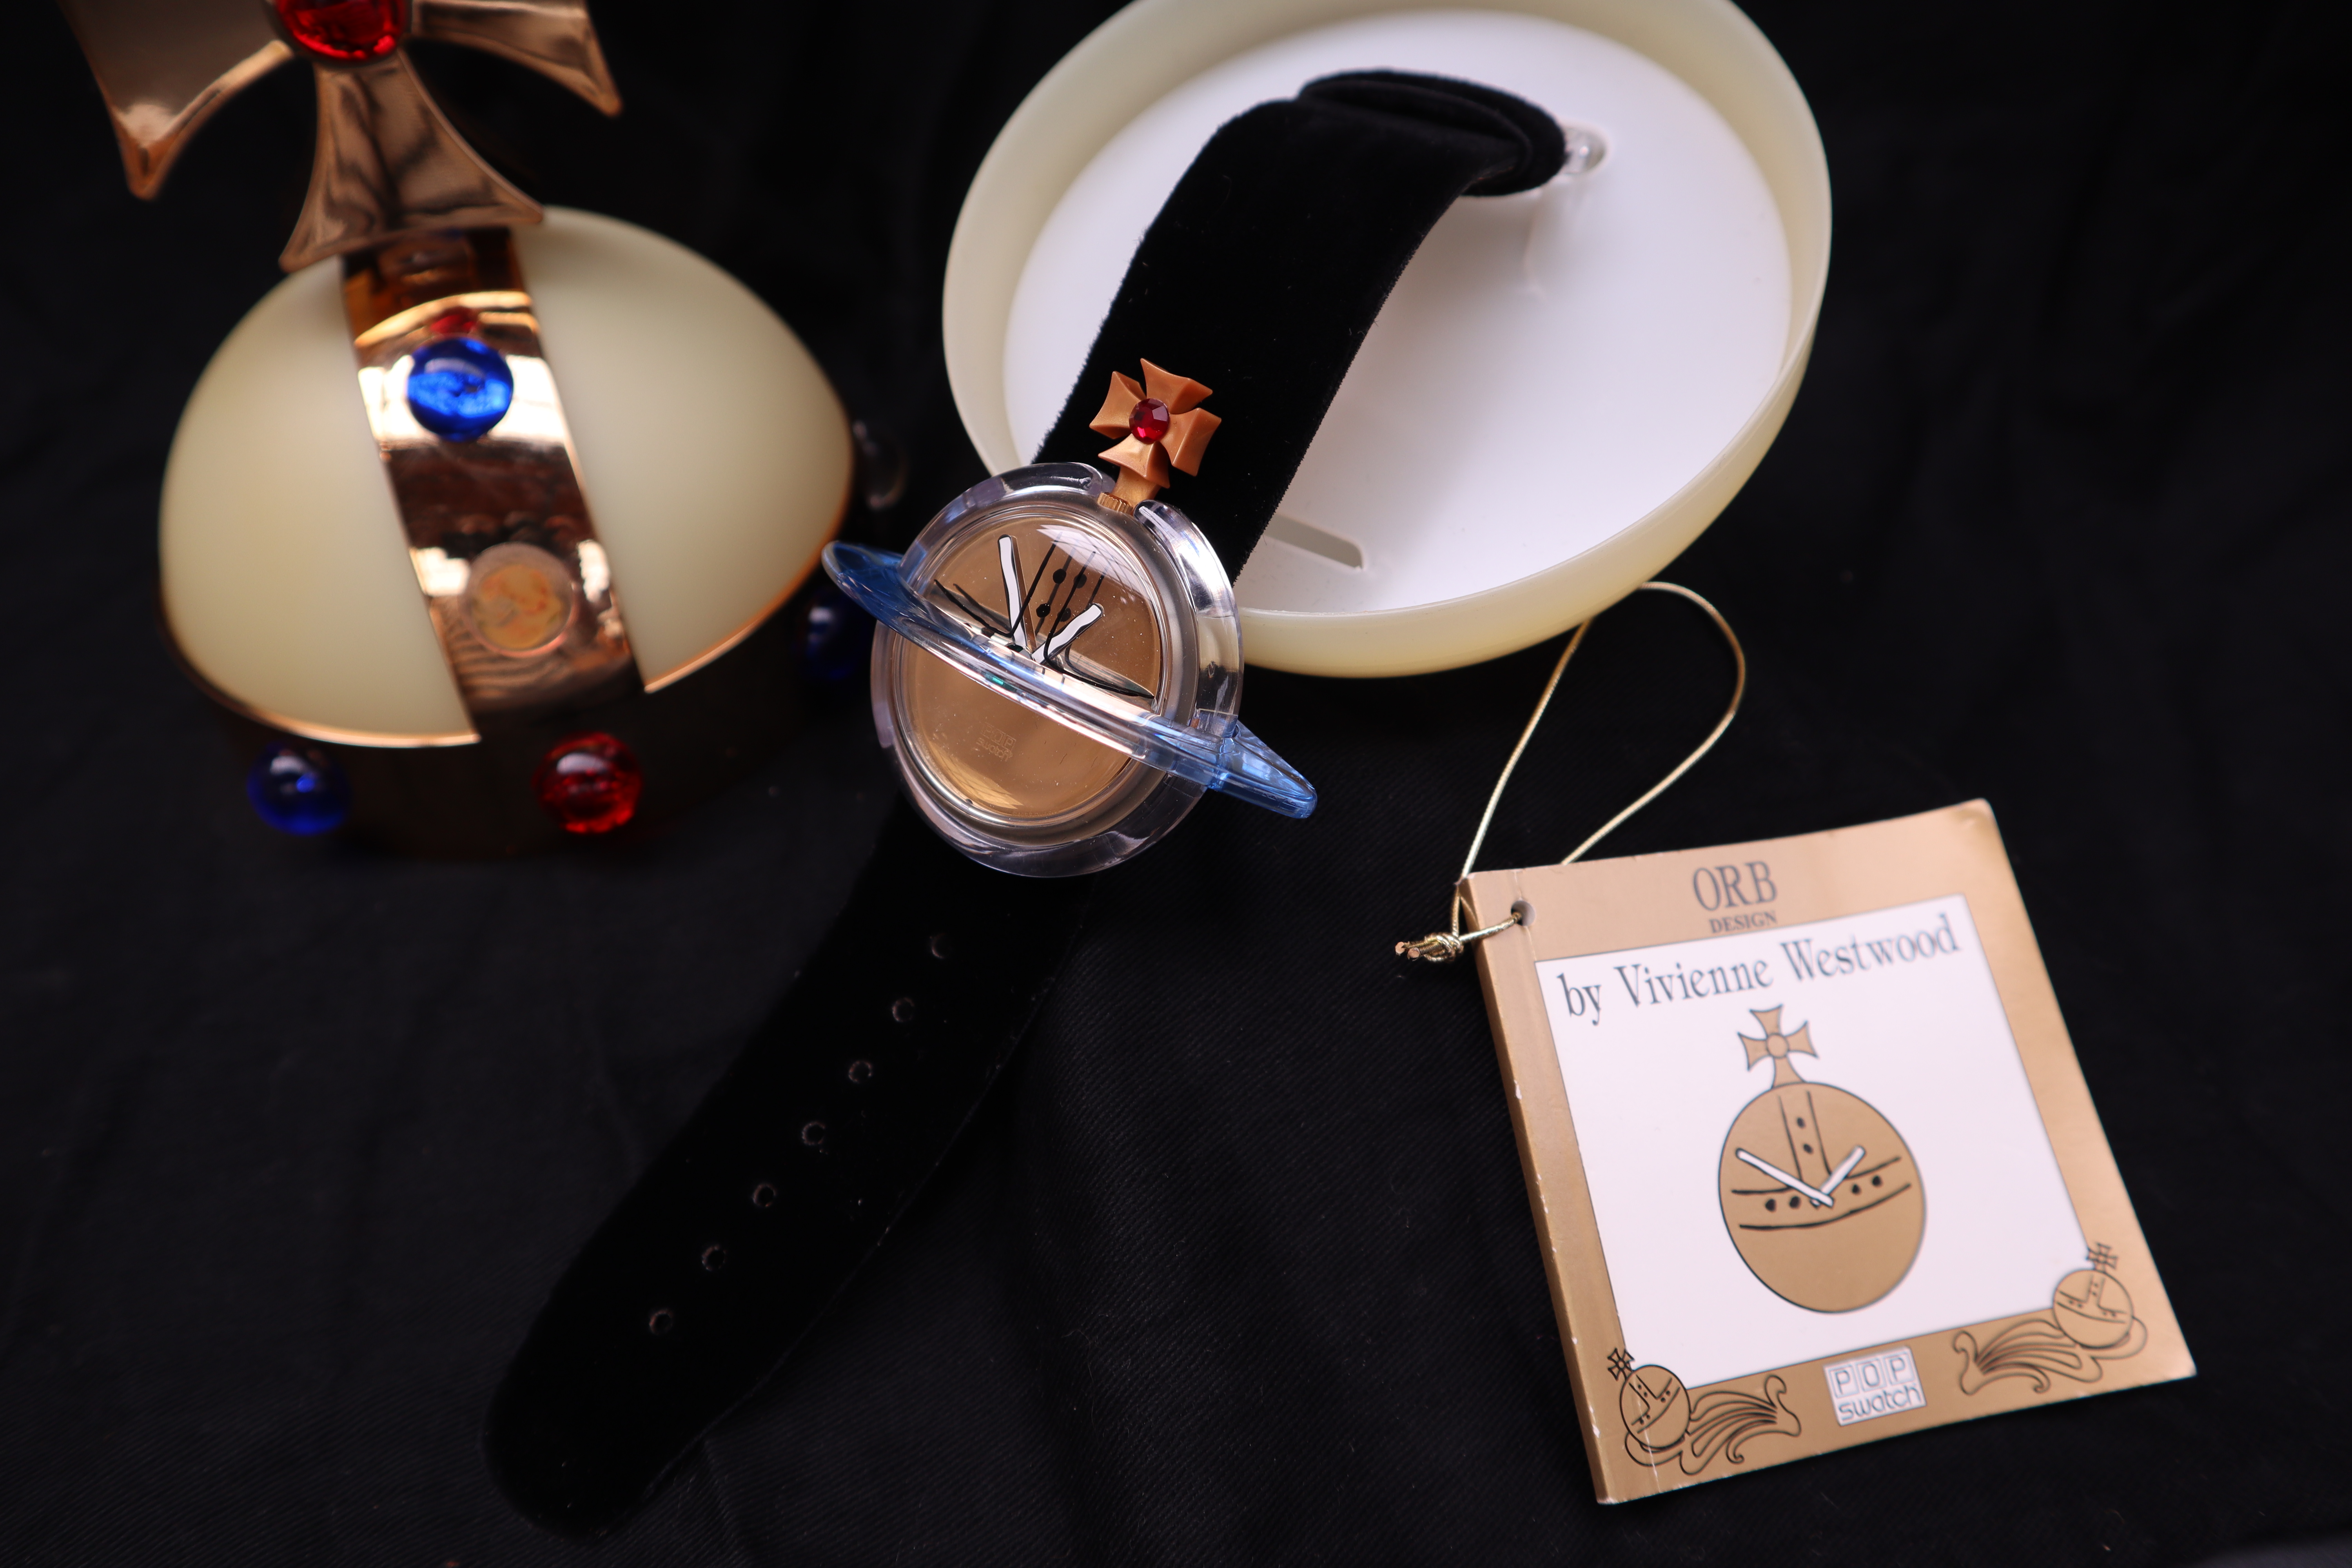 A Vivienne Westwood orb Swatch wristwatch, - Image 4 of 6